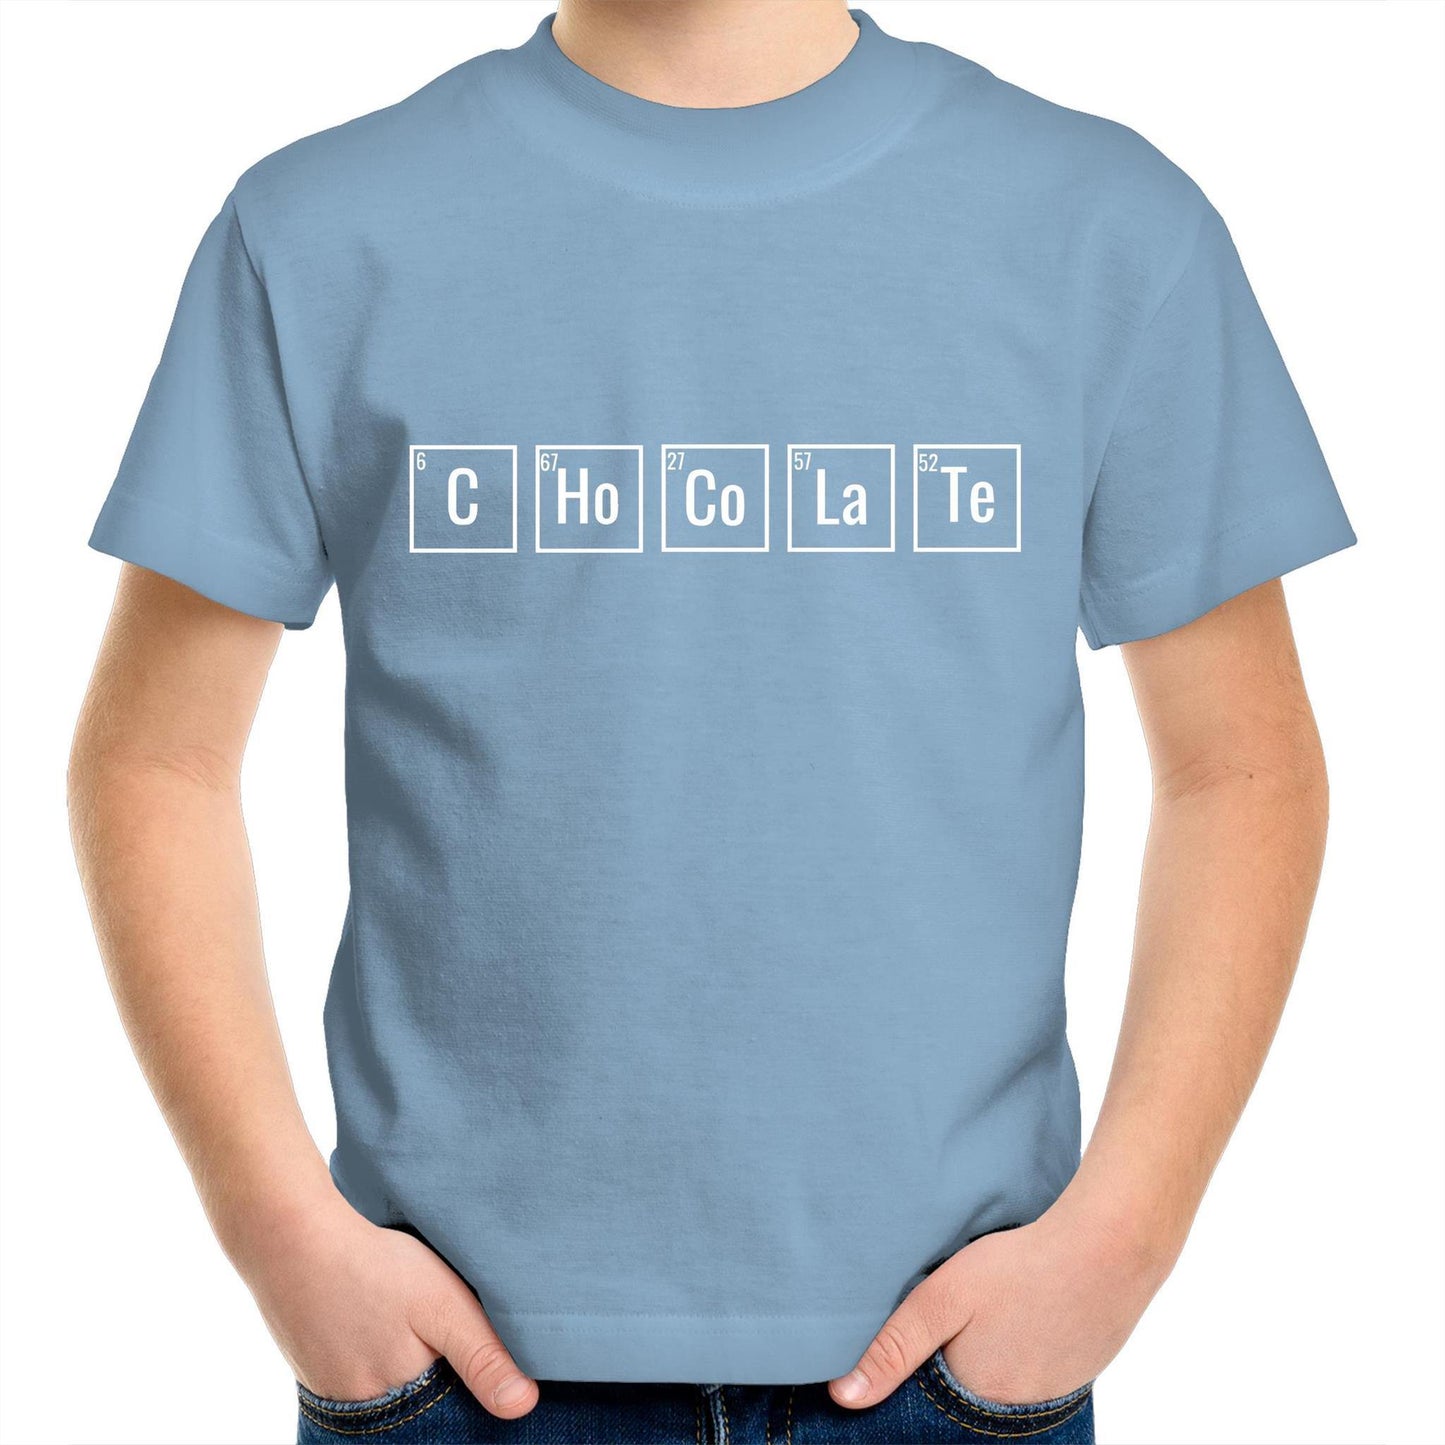 Chocolate Symbols - Kids Youth Crew T-Shirt Carolina Blue Kids Youth T-shirt Chocolate Science